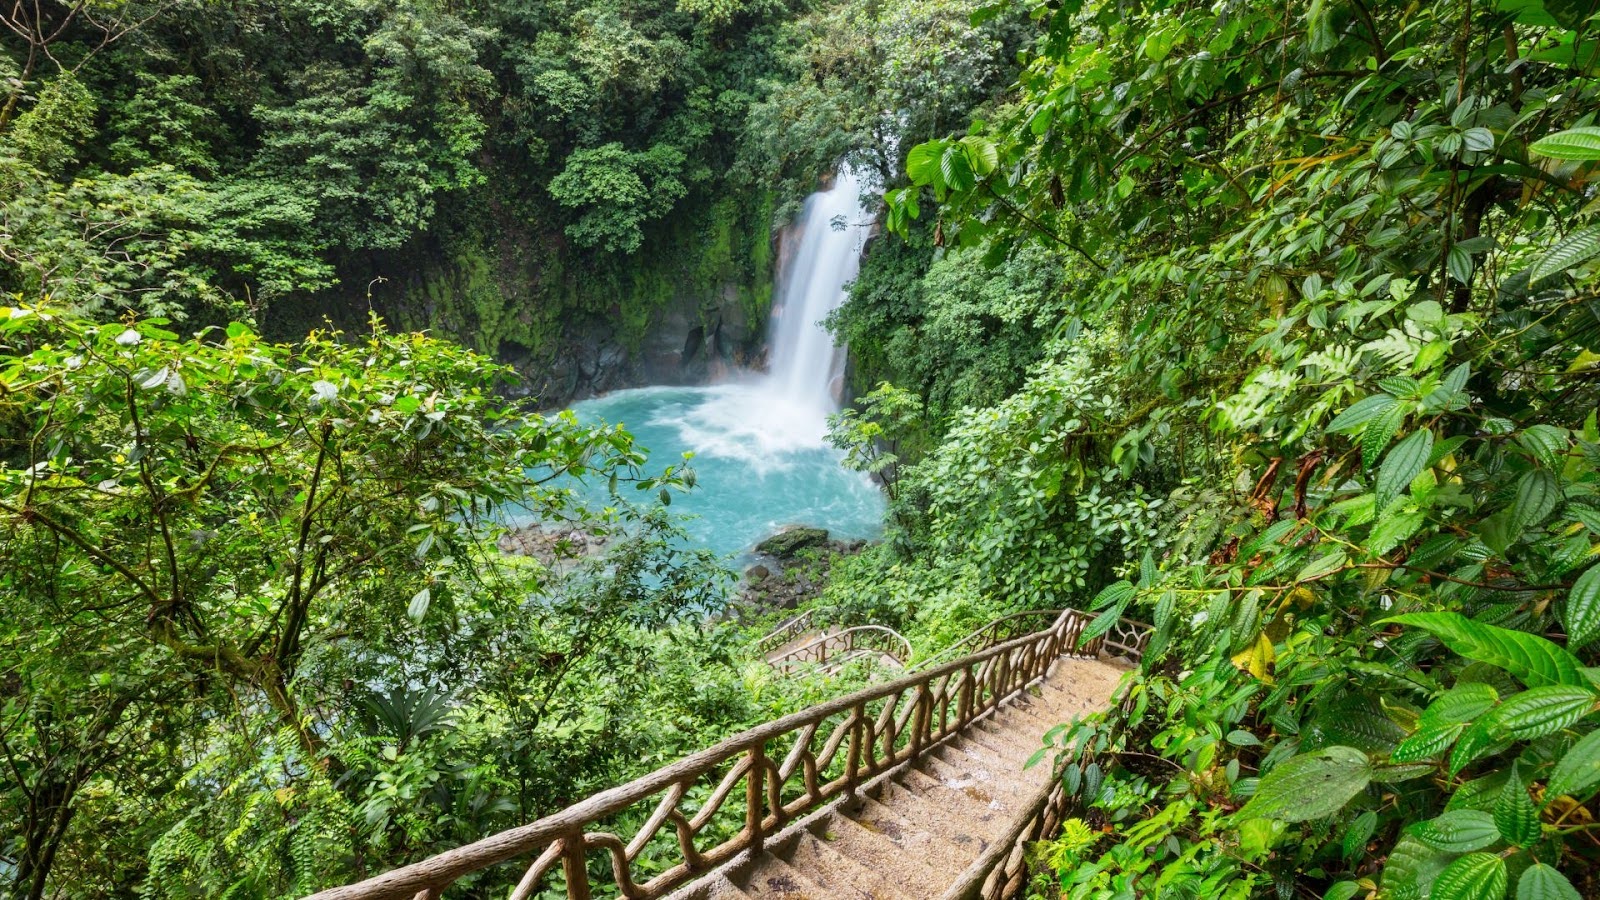 Budget Friendly Travel Destinations - Costa Rica